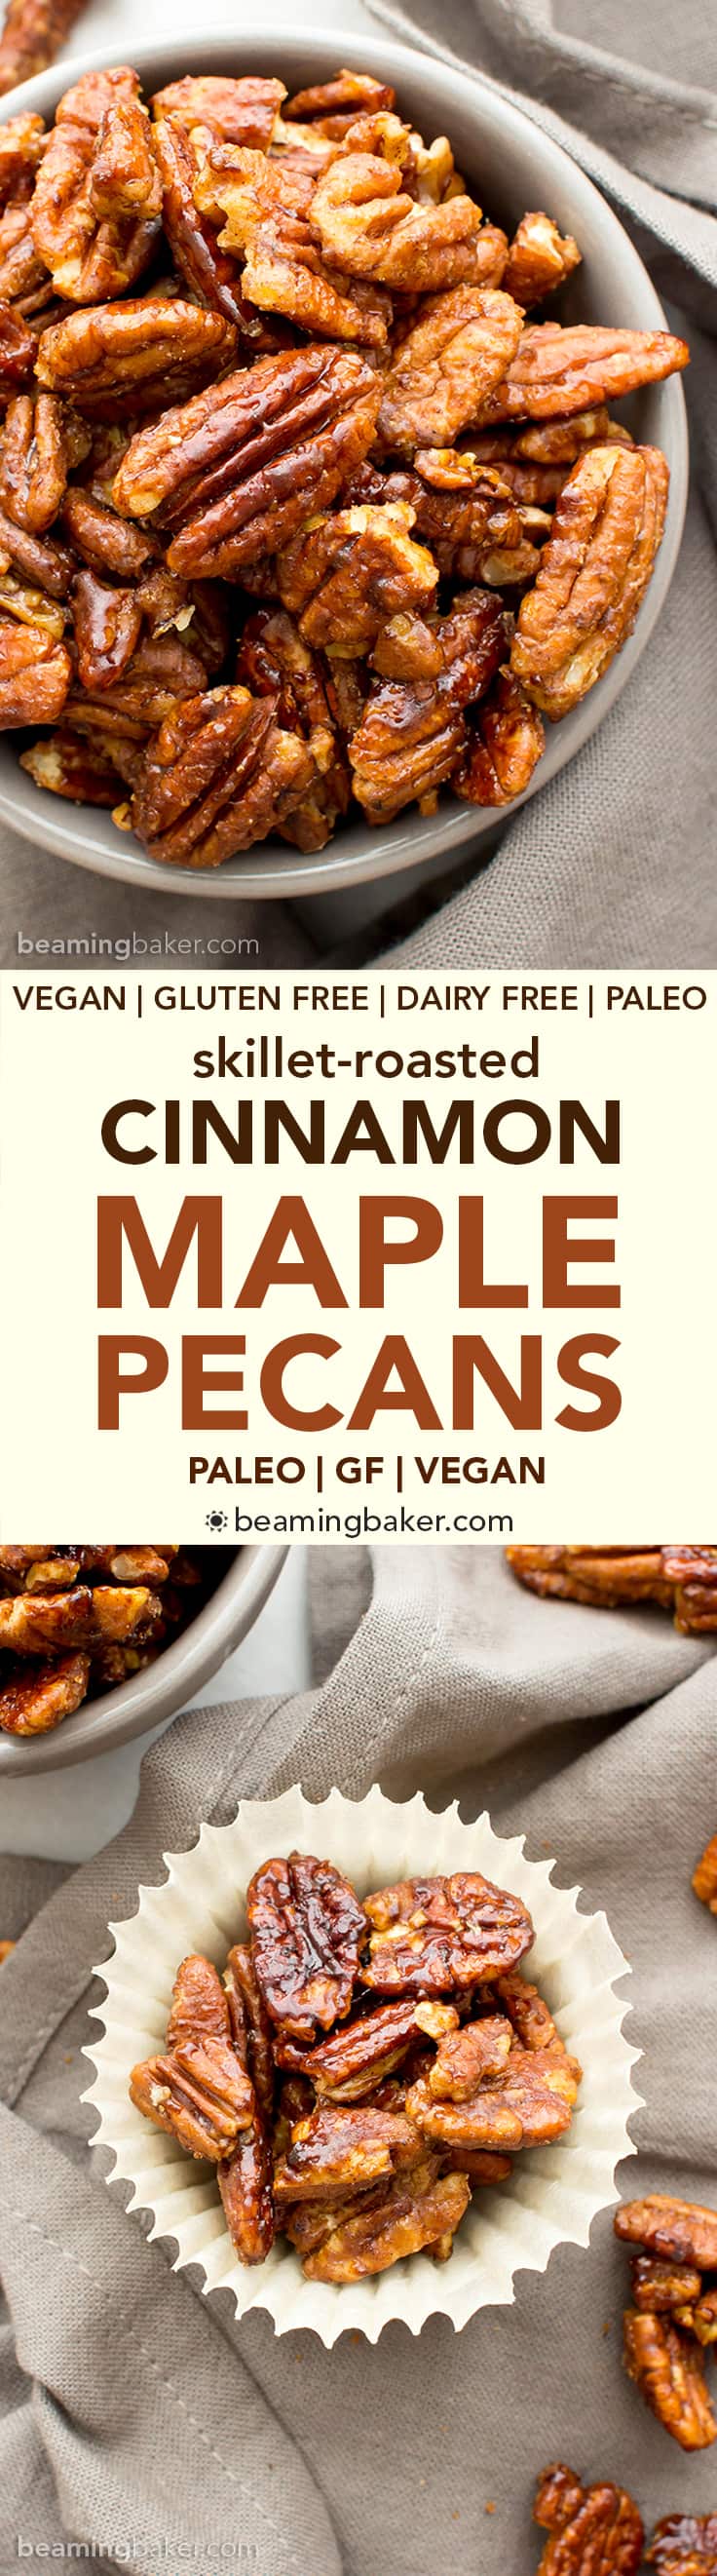 Skillet-Roasted Maple Cinnamon Pecans (V, GF, Paleo): a 6-ingredient recipe for warm, cozy skillet-roasted pecans glazed with coconut sugar and cinnamon. #Paleo #Vegan #GlutenFree #DairyFree | BeamingBaker.com